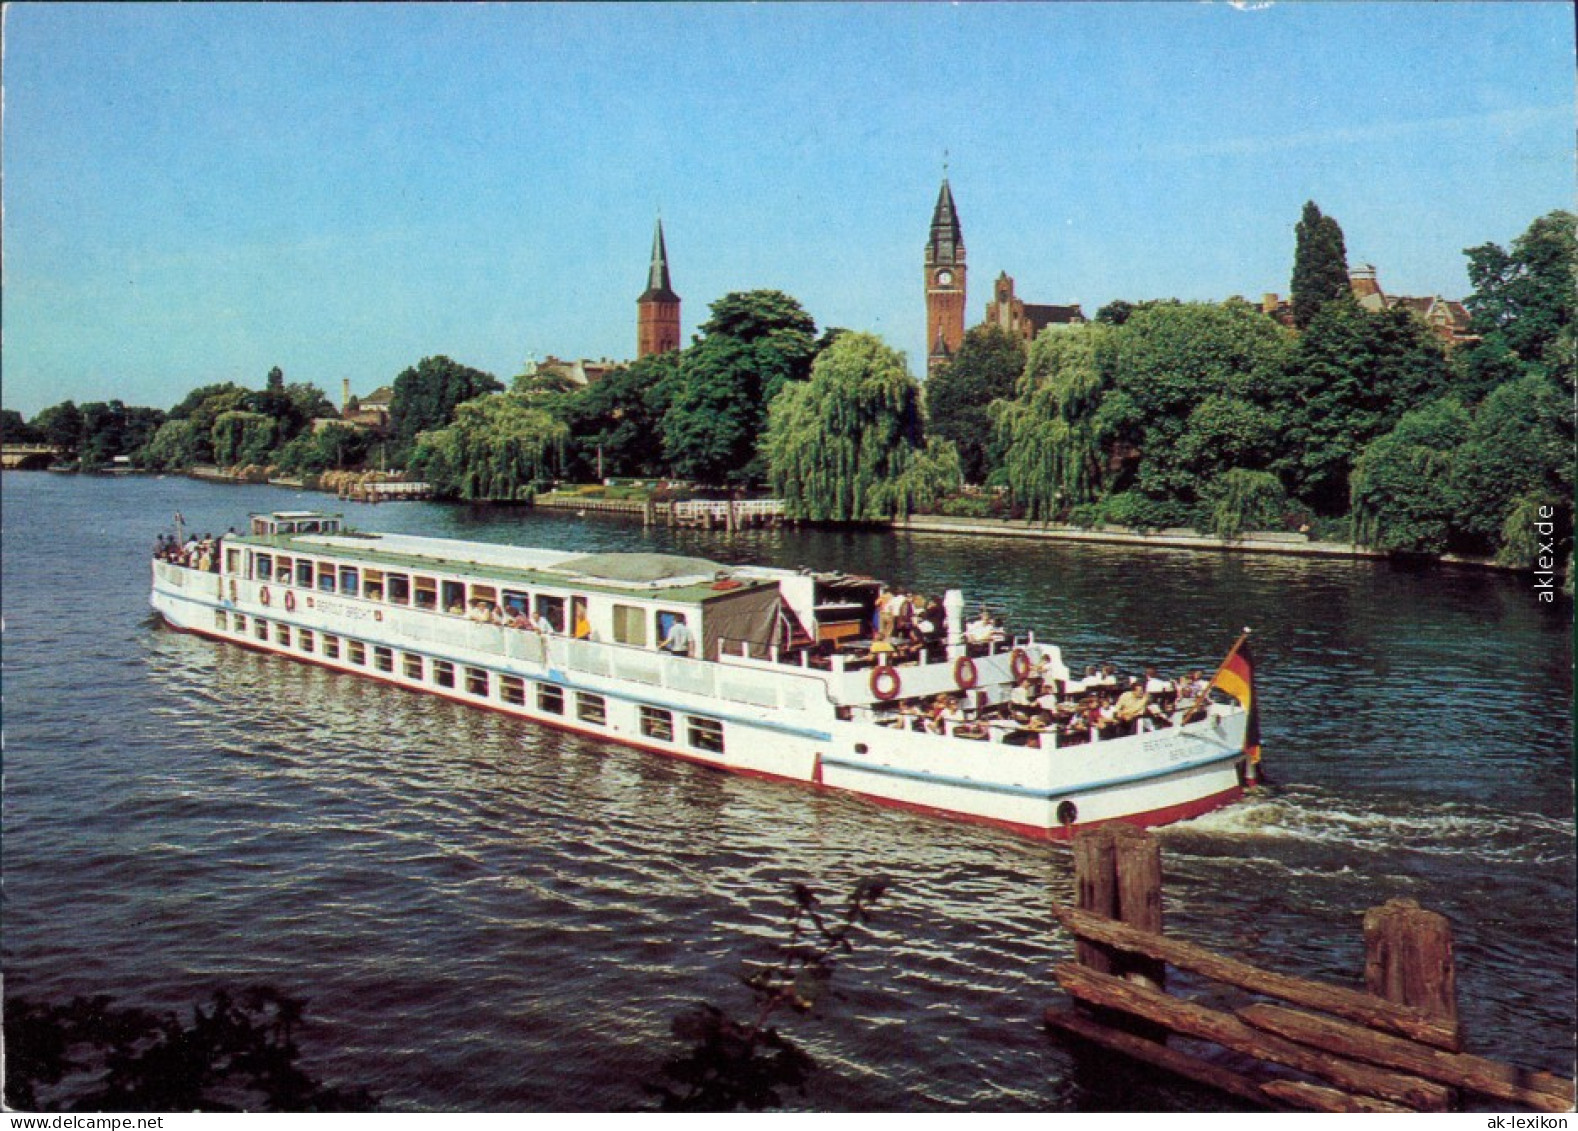 Ansichtskarte Berlin Fahrgastschiff "Bertolt Brecht" 1985 - Koepenick